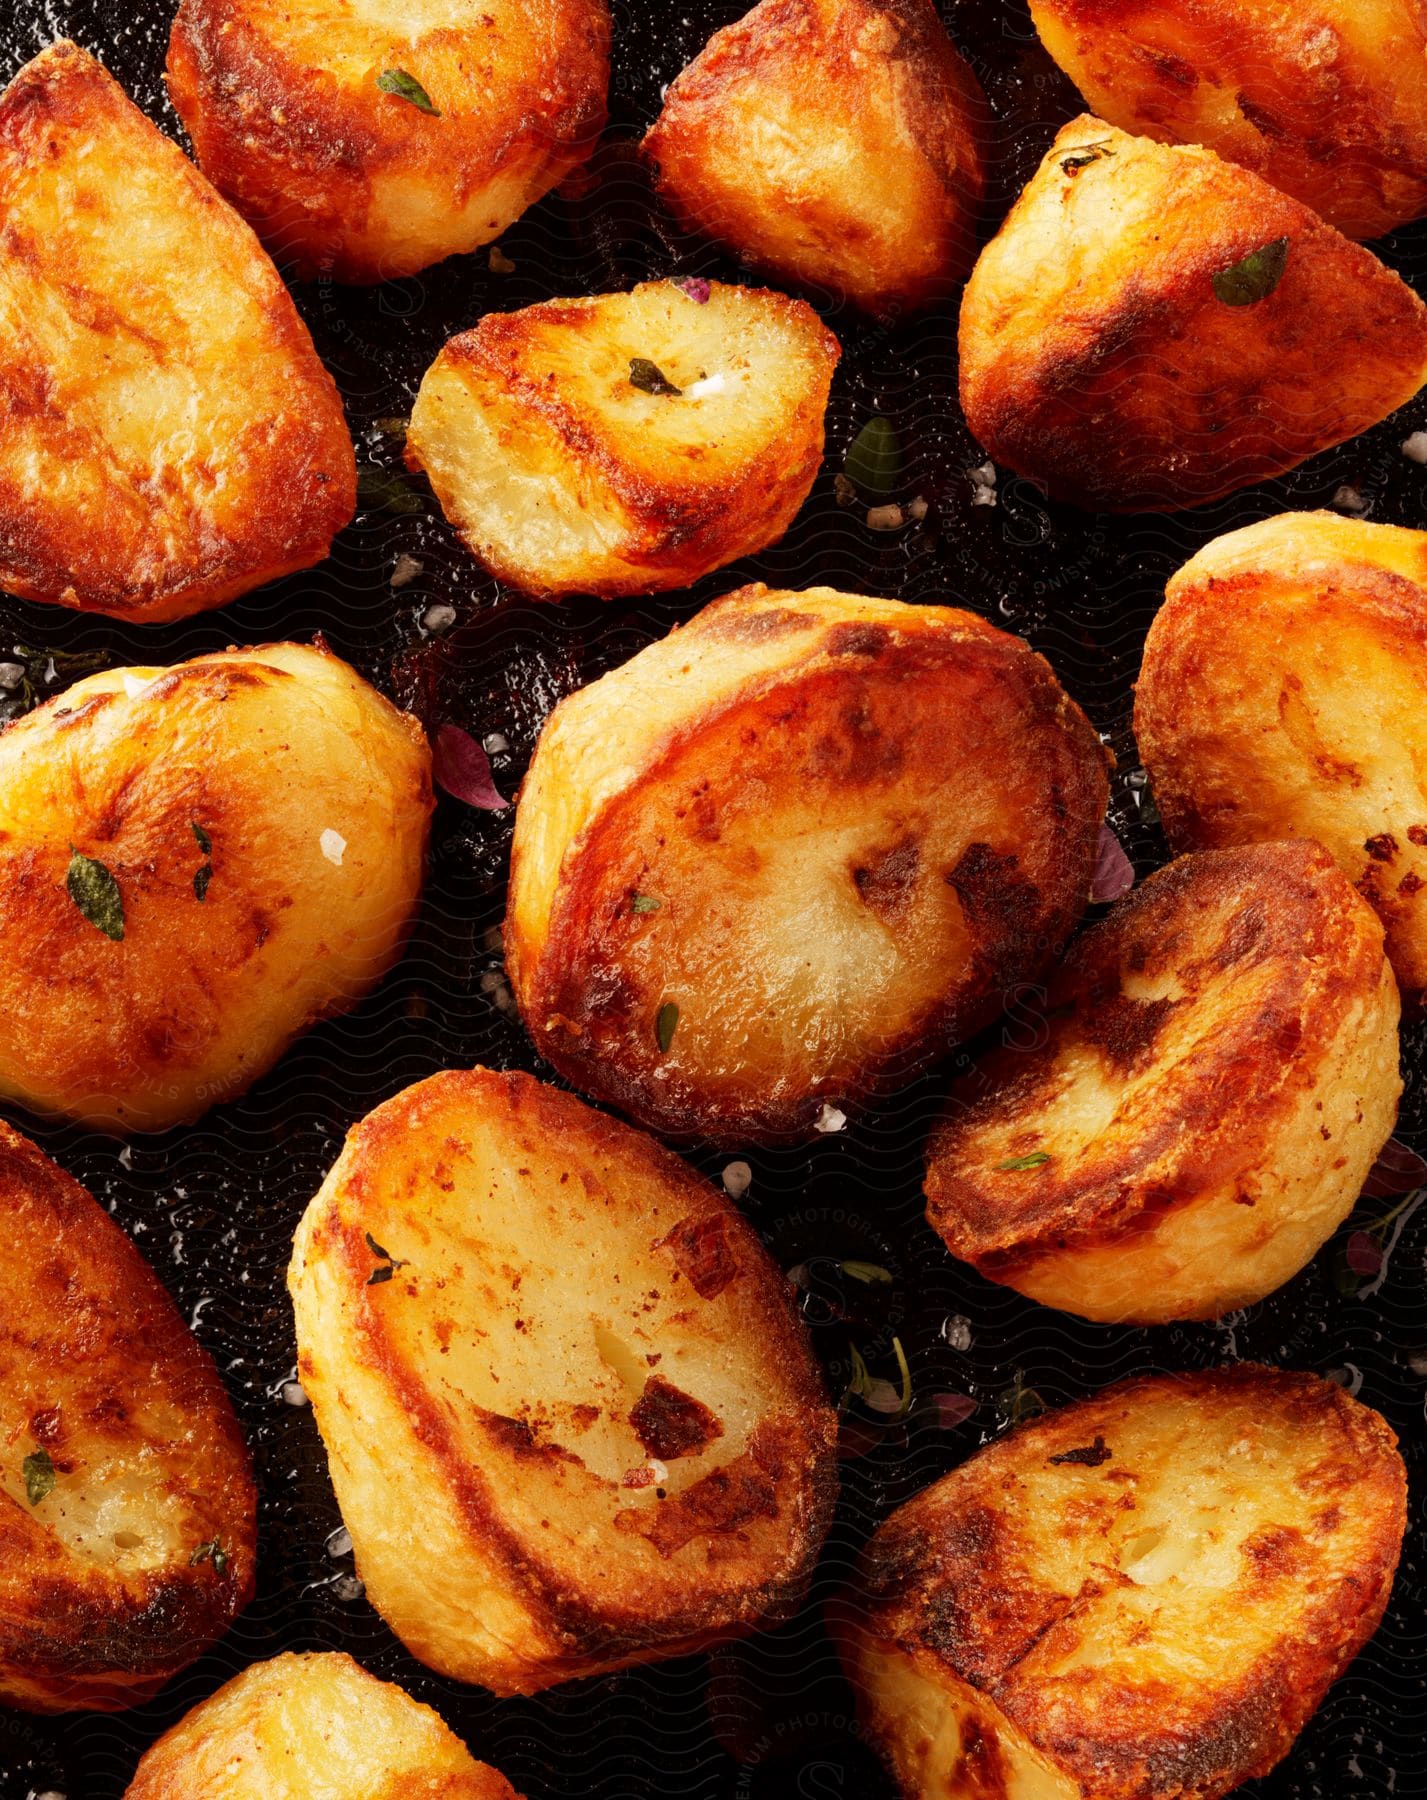 Stock photo of a closeup of cooking potatoes